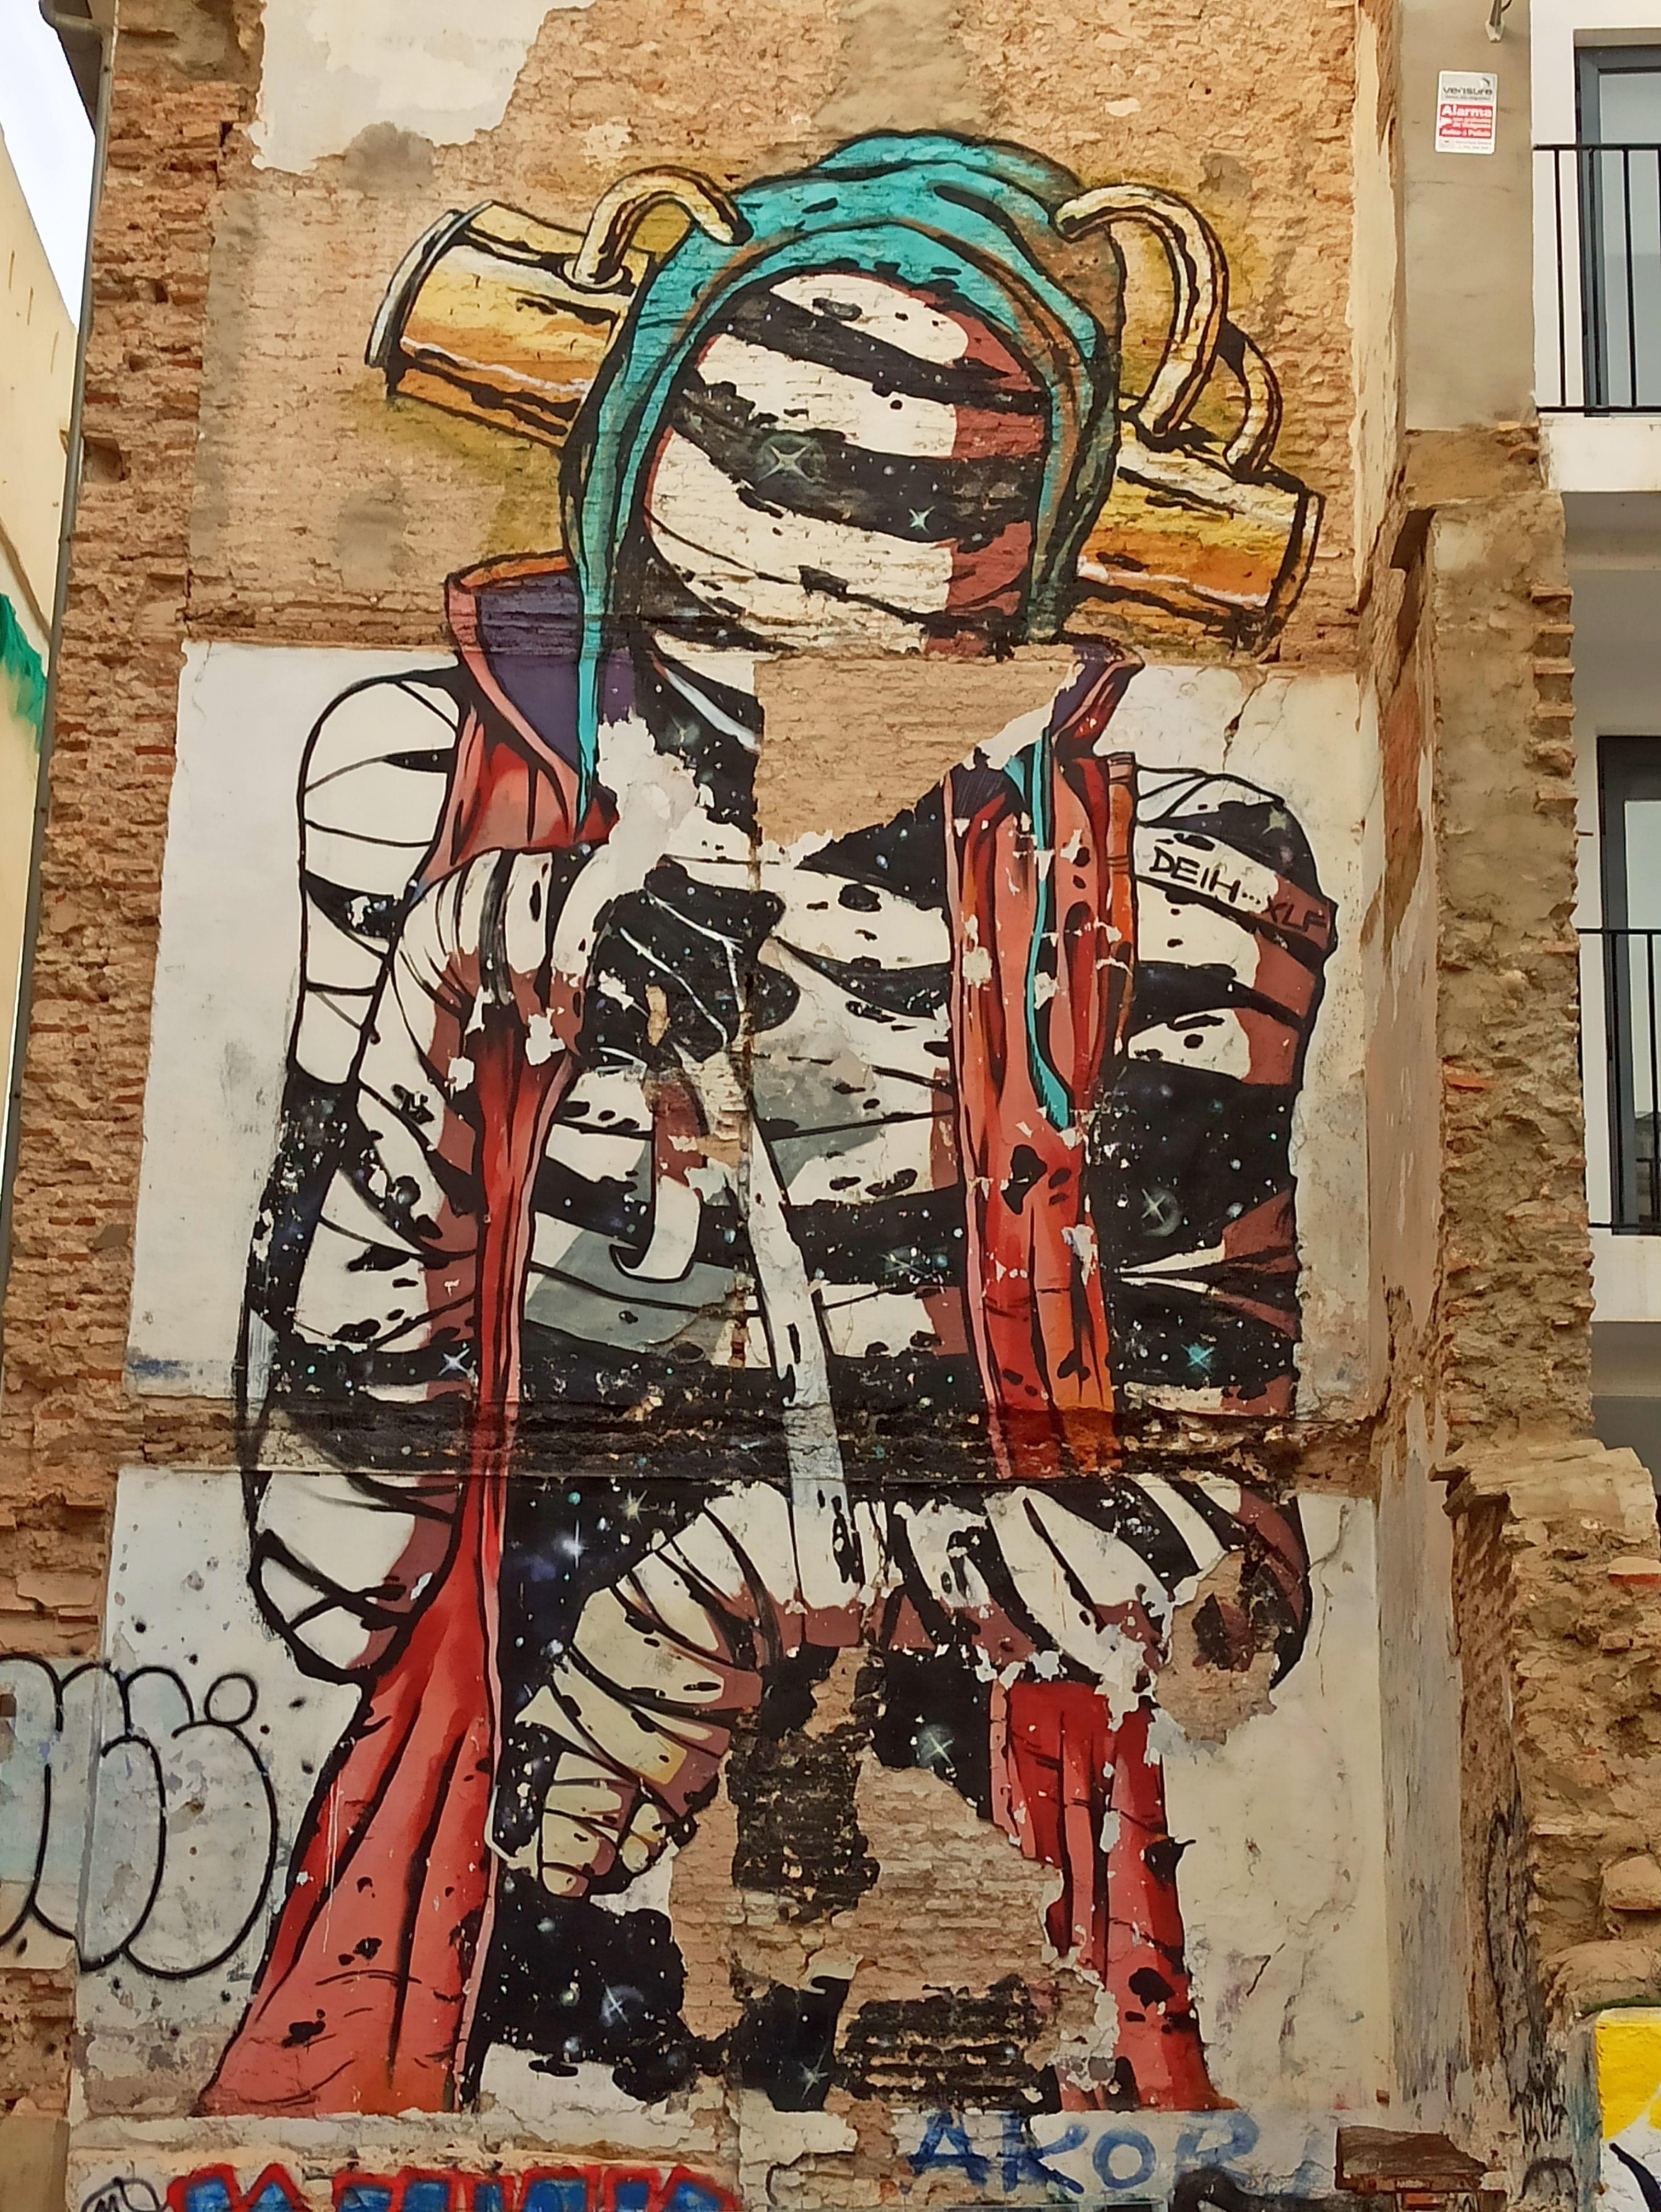 Graffiti 4798  by the artist Deih xlf captured by elettrotajik in València Spain